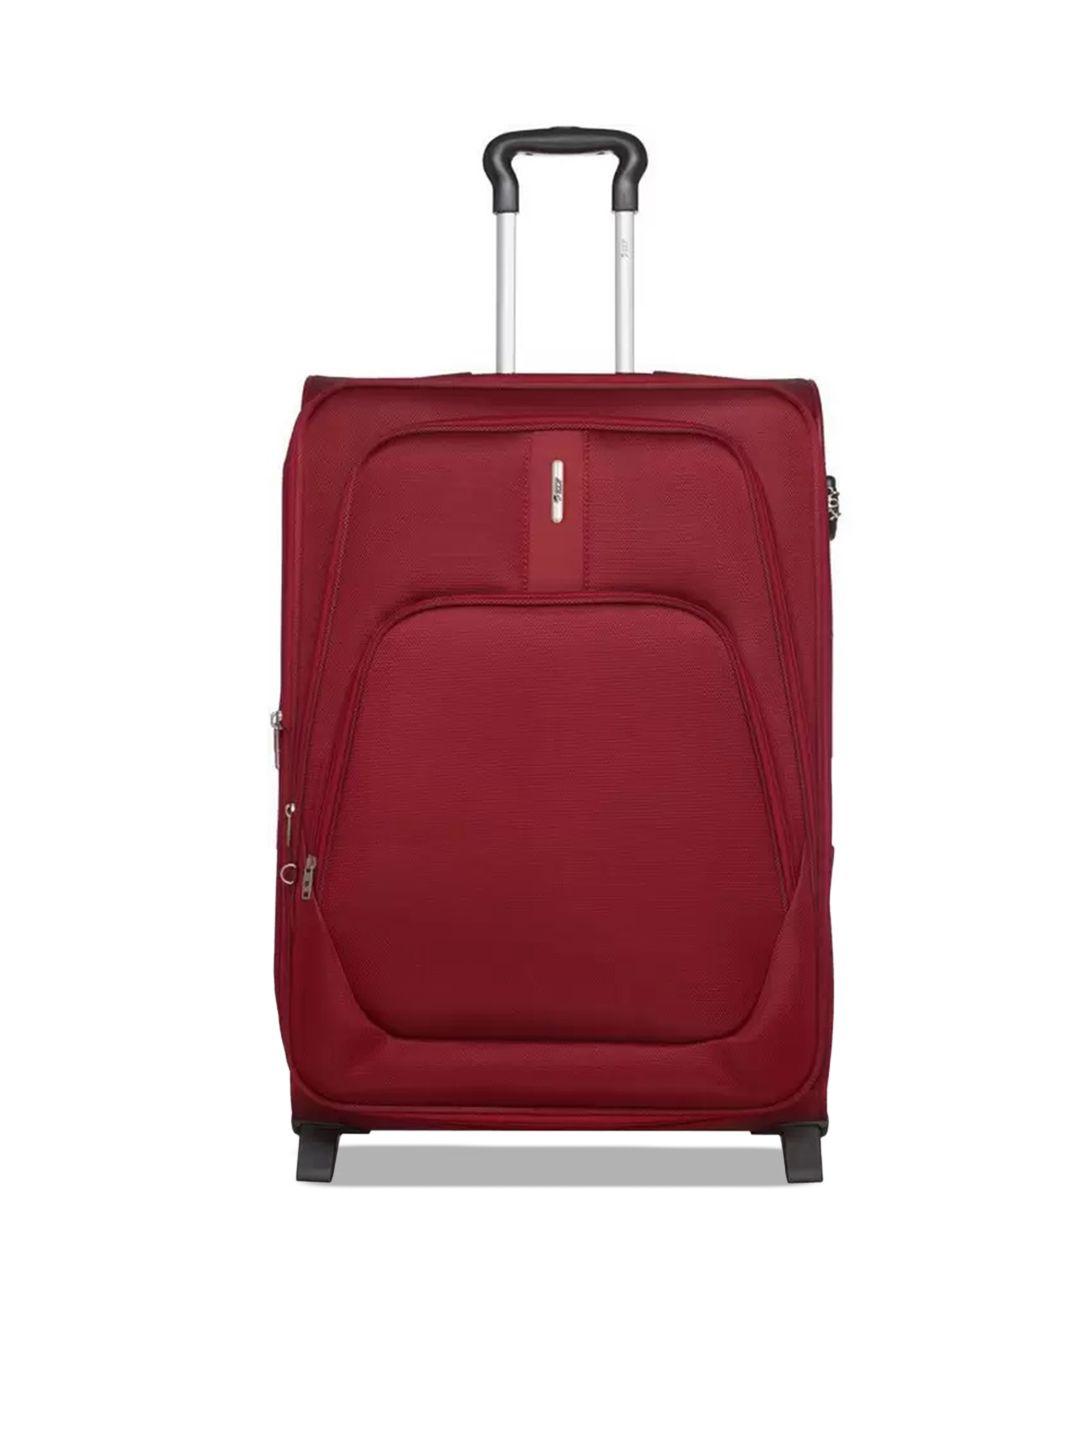 vip mercury water resistant hard cabin trolley suitcase - 55 cm